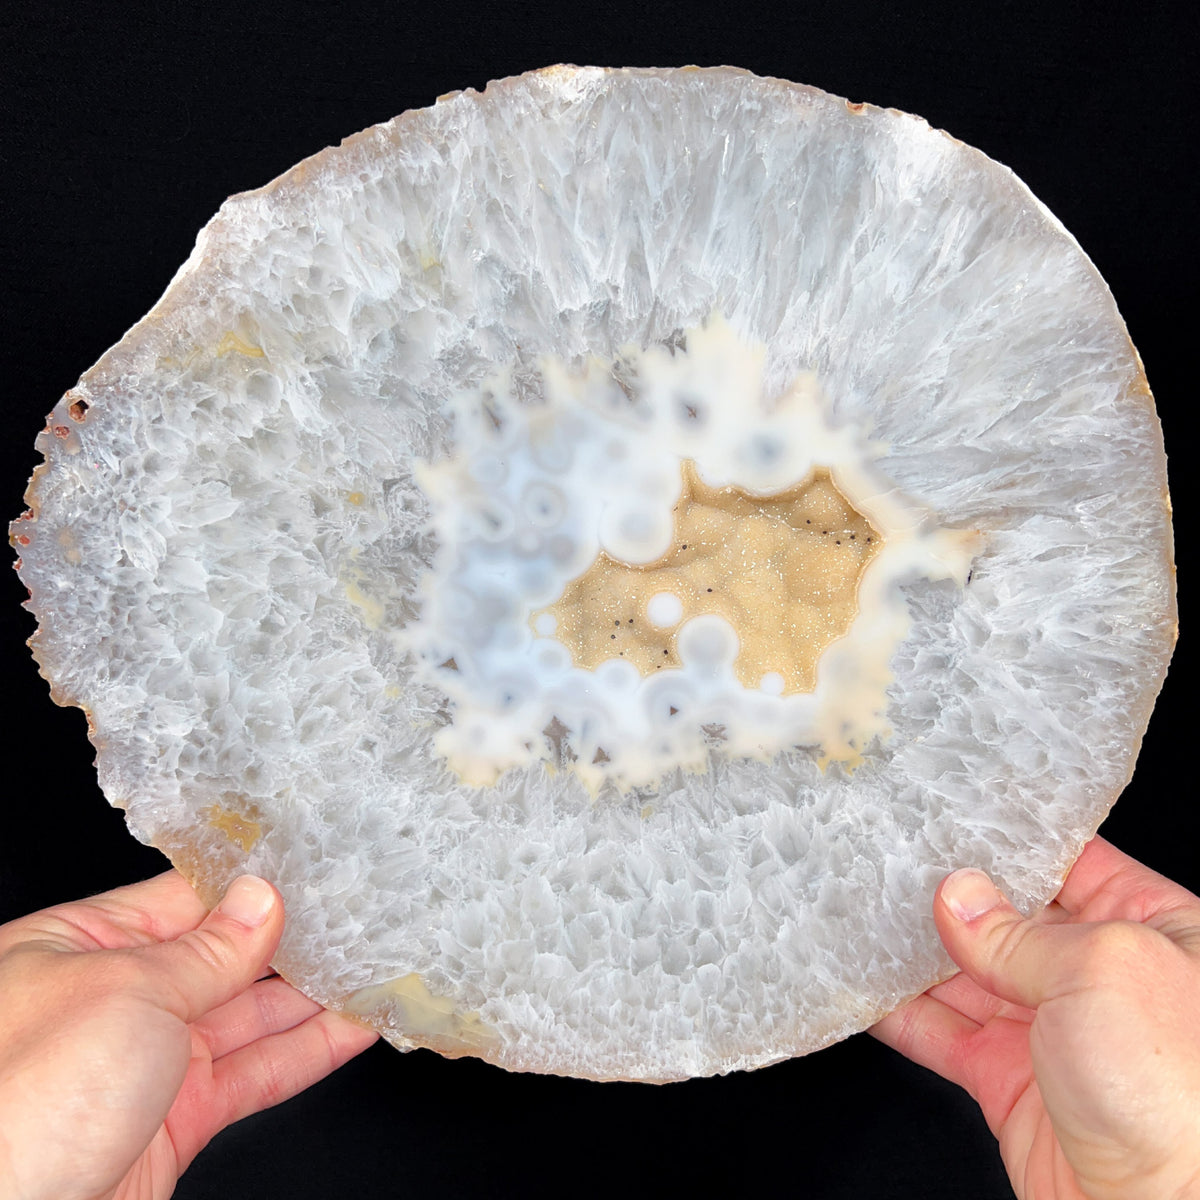 Large Quartz Geode Agate Slice from Brazil